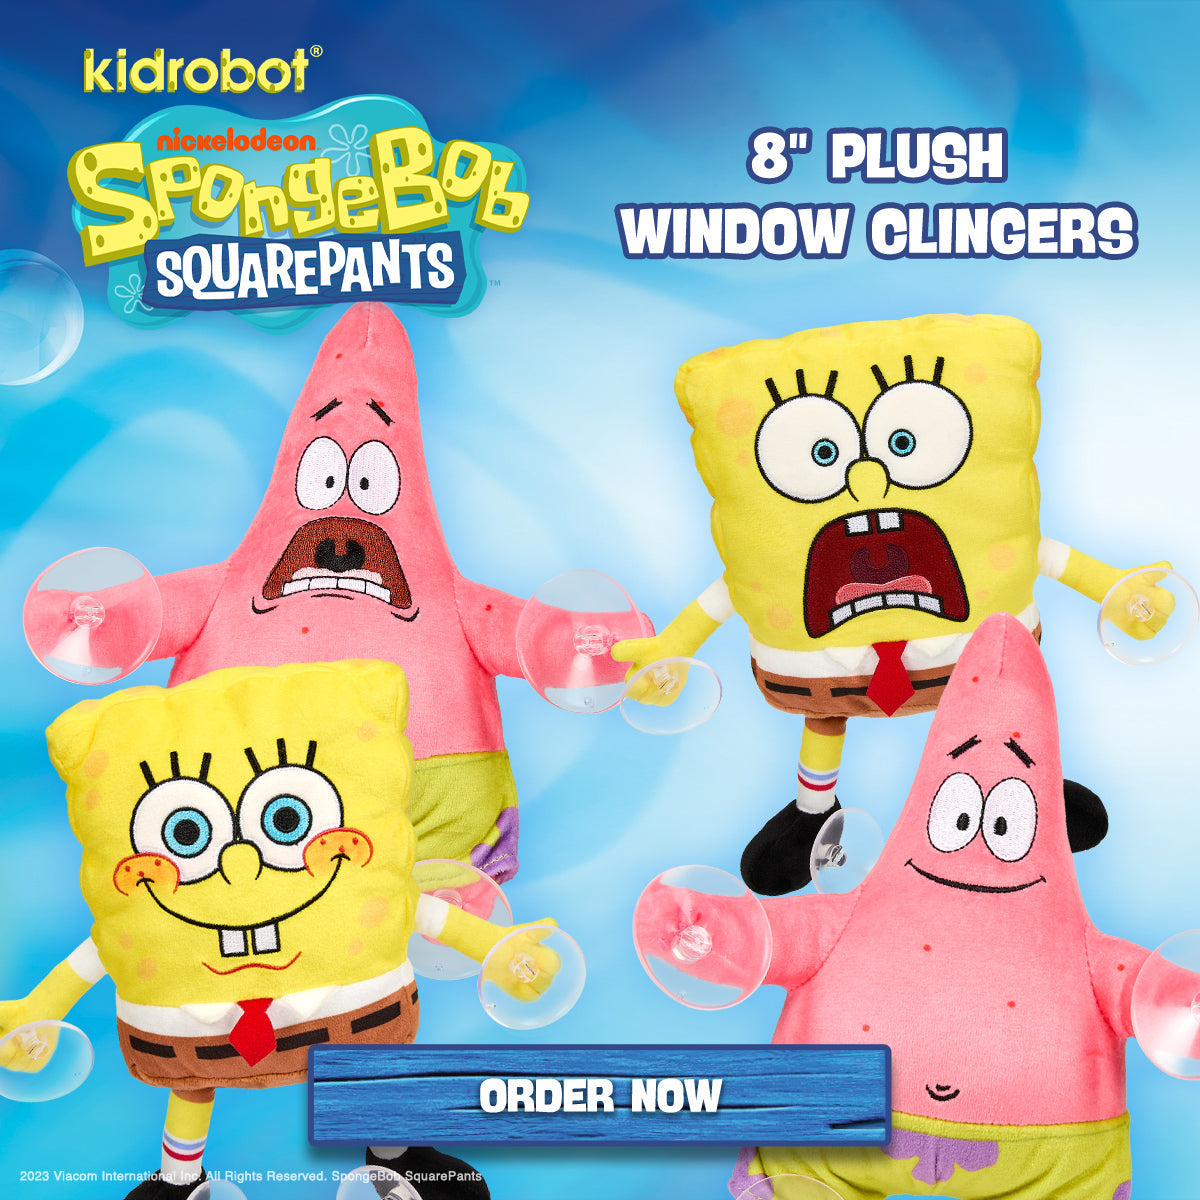 Kidrobot Window Clingers